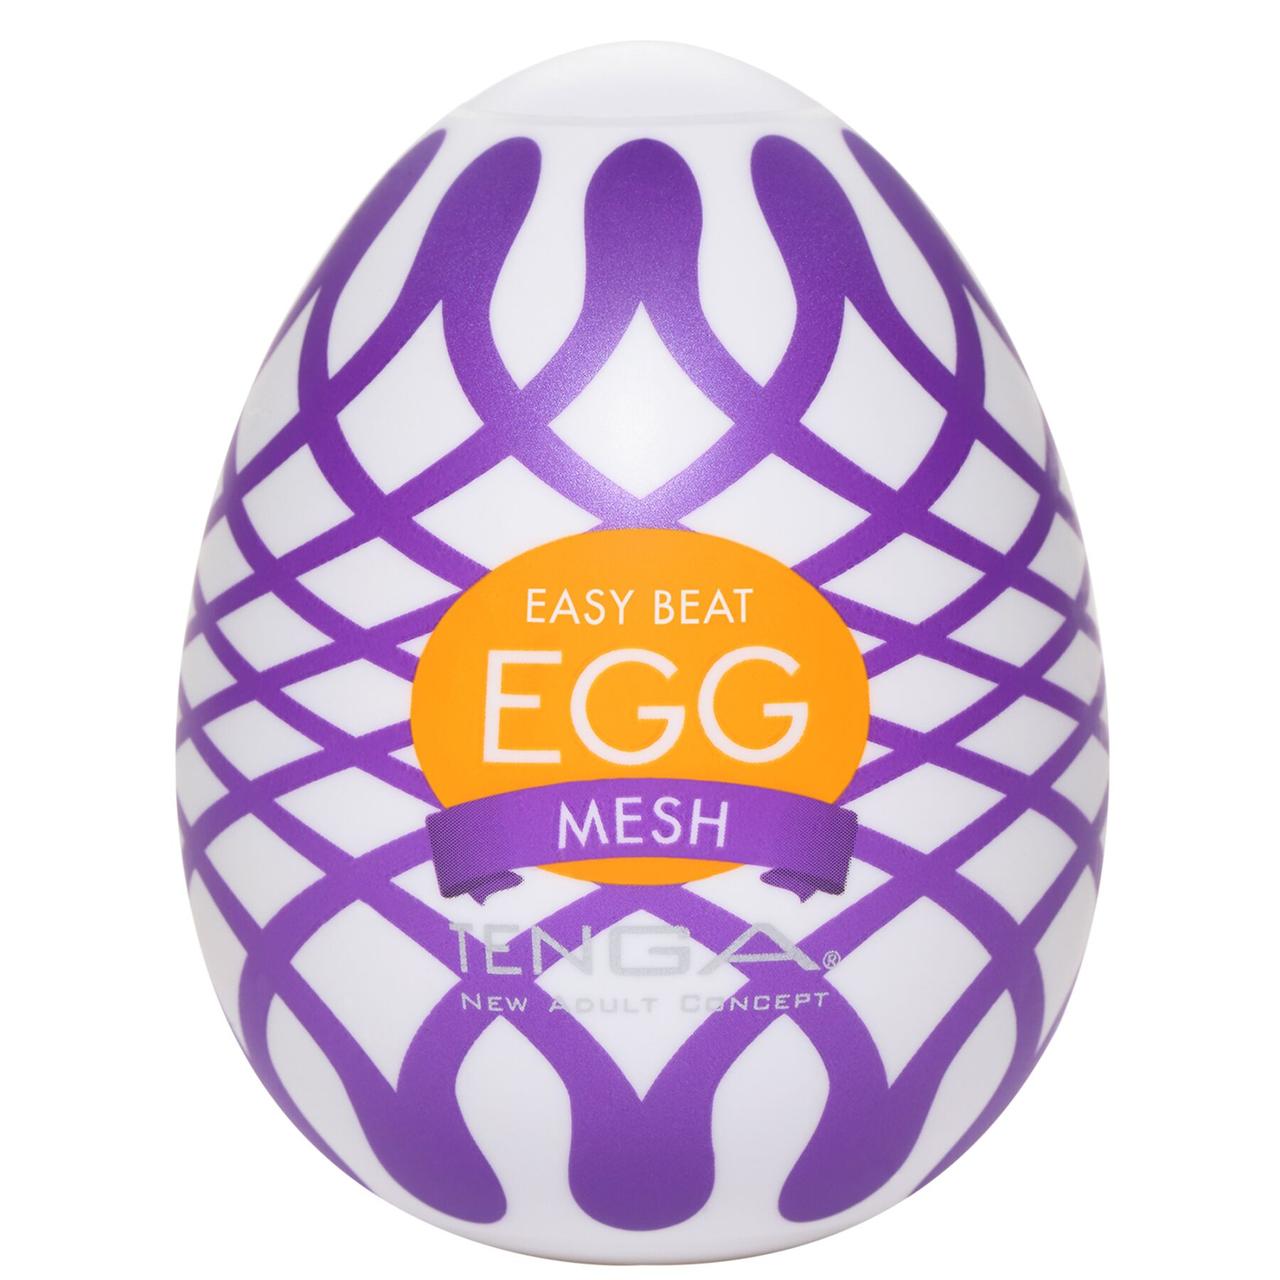 Мастурбатор-яйцо Tanga Egg Mesh із сітчастим рельєфом 777Store.com.ua